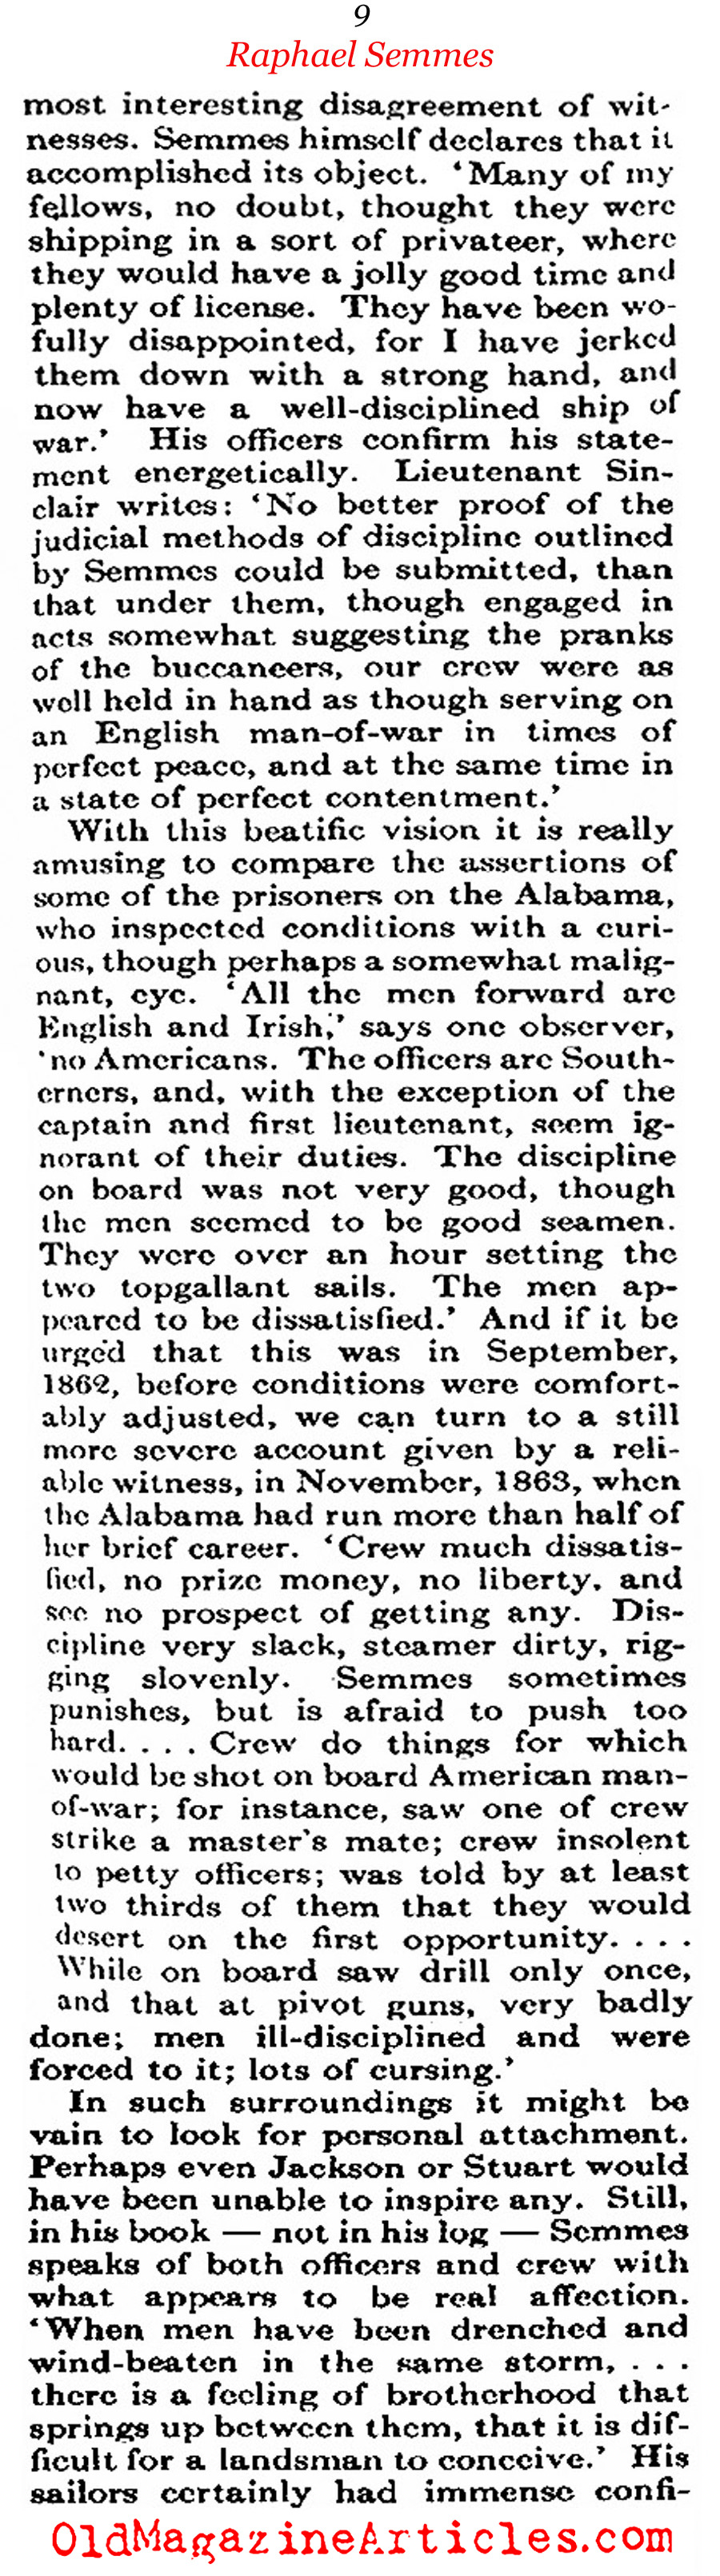  Civil War Pirate Raphael Semmes (Atlantic Monthly, 1913)